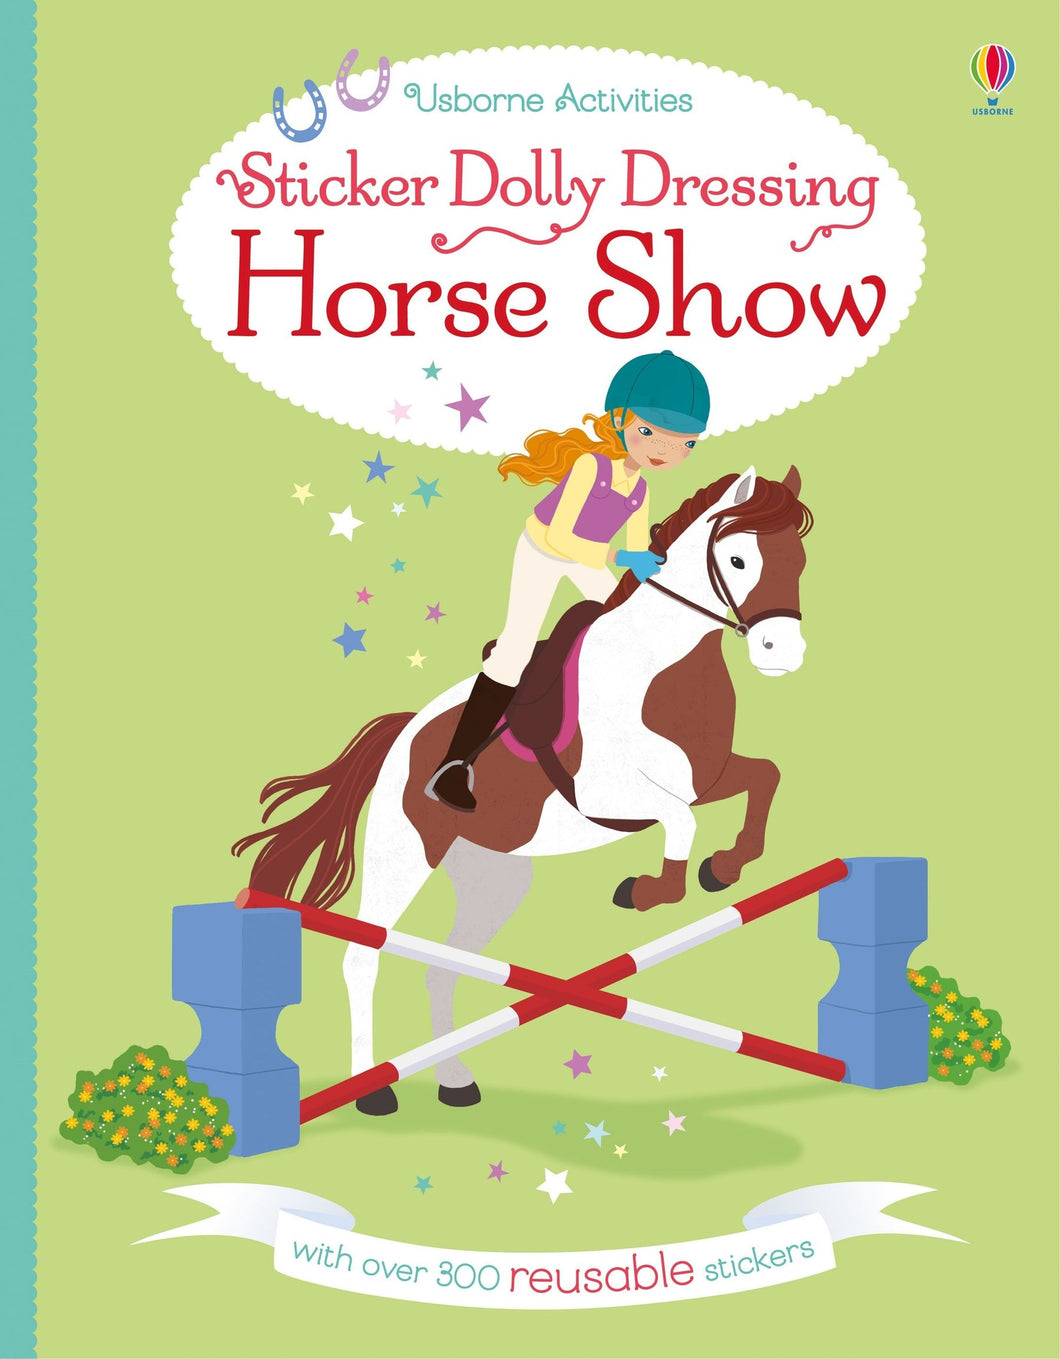 Usborne Sticker Dolly Dressing Horse Show